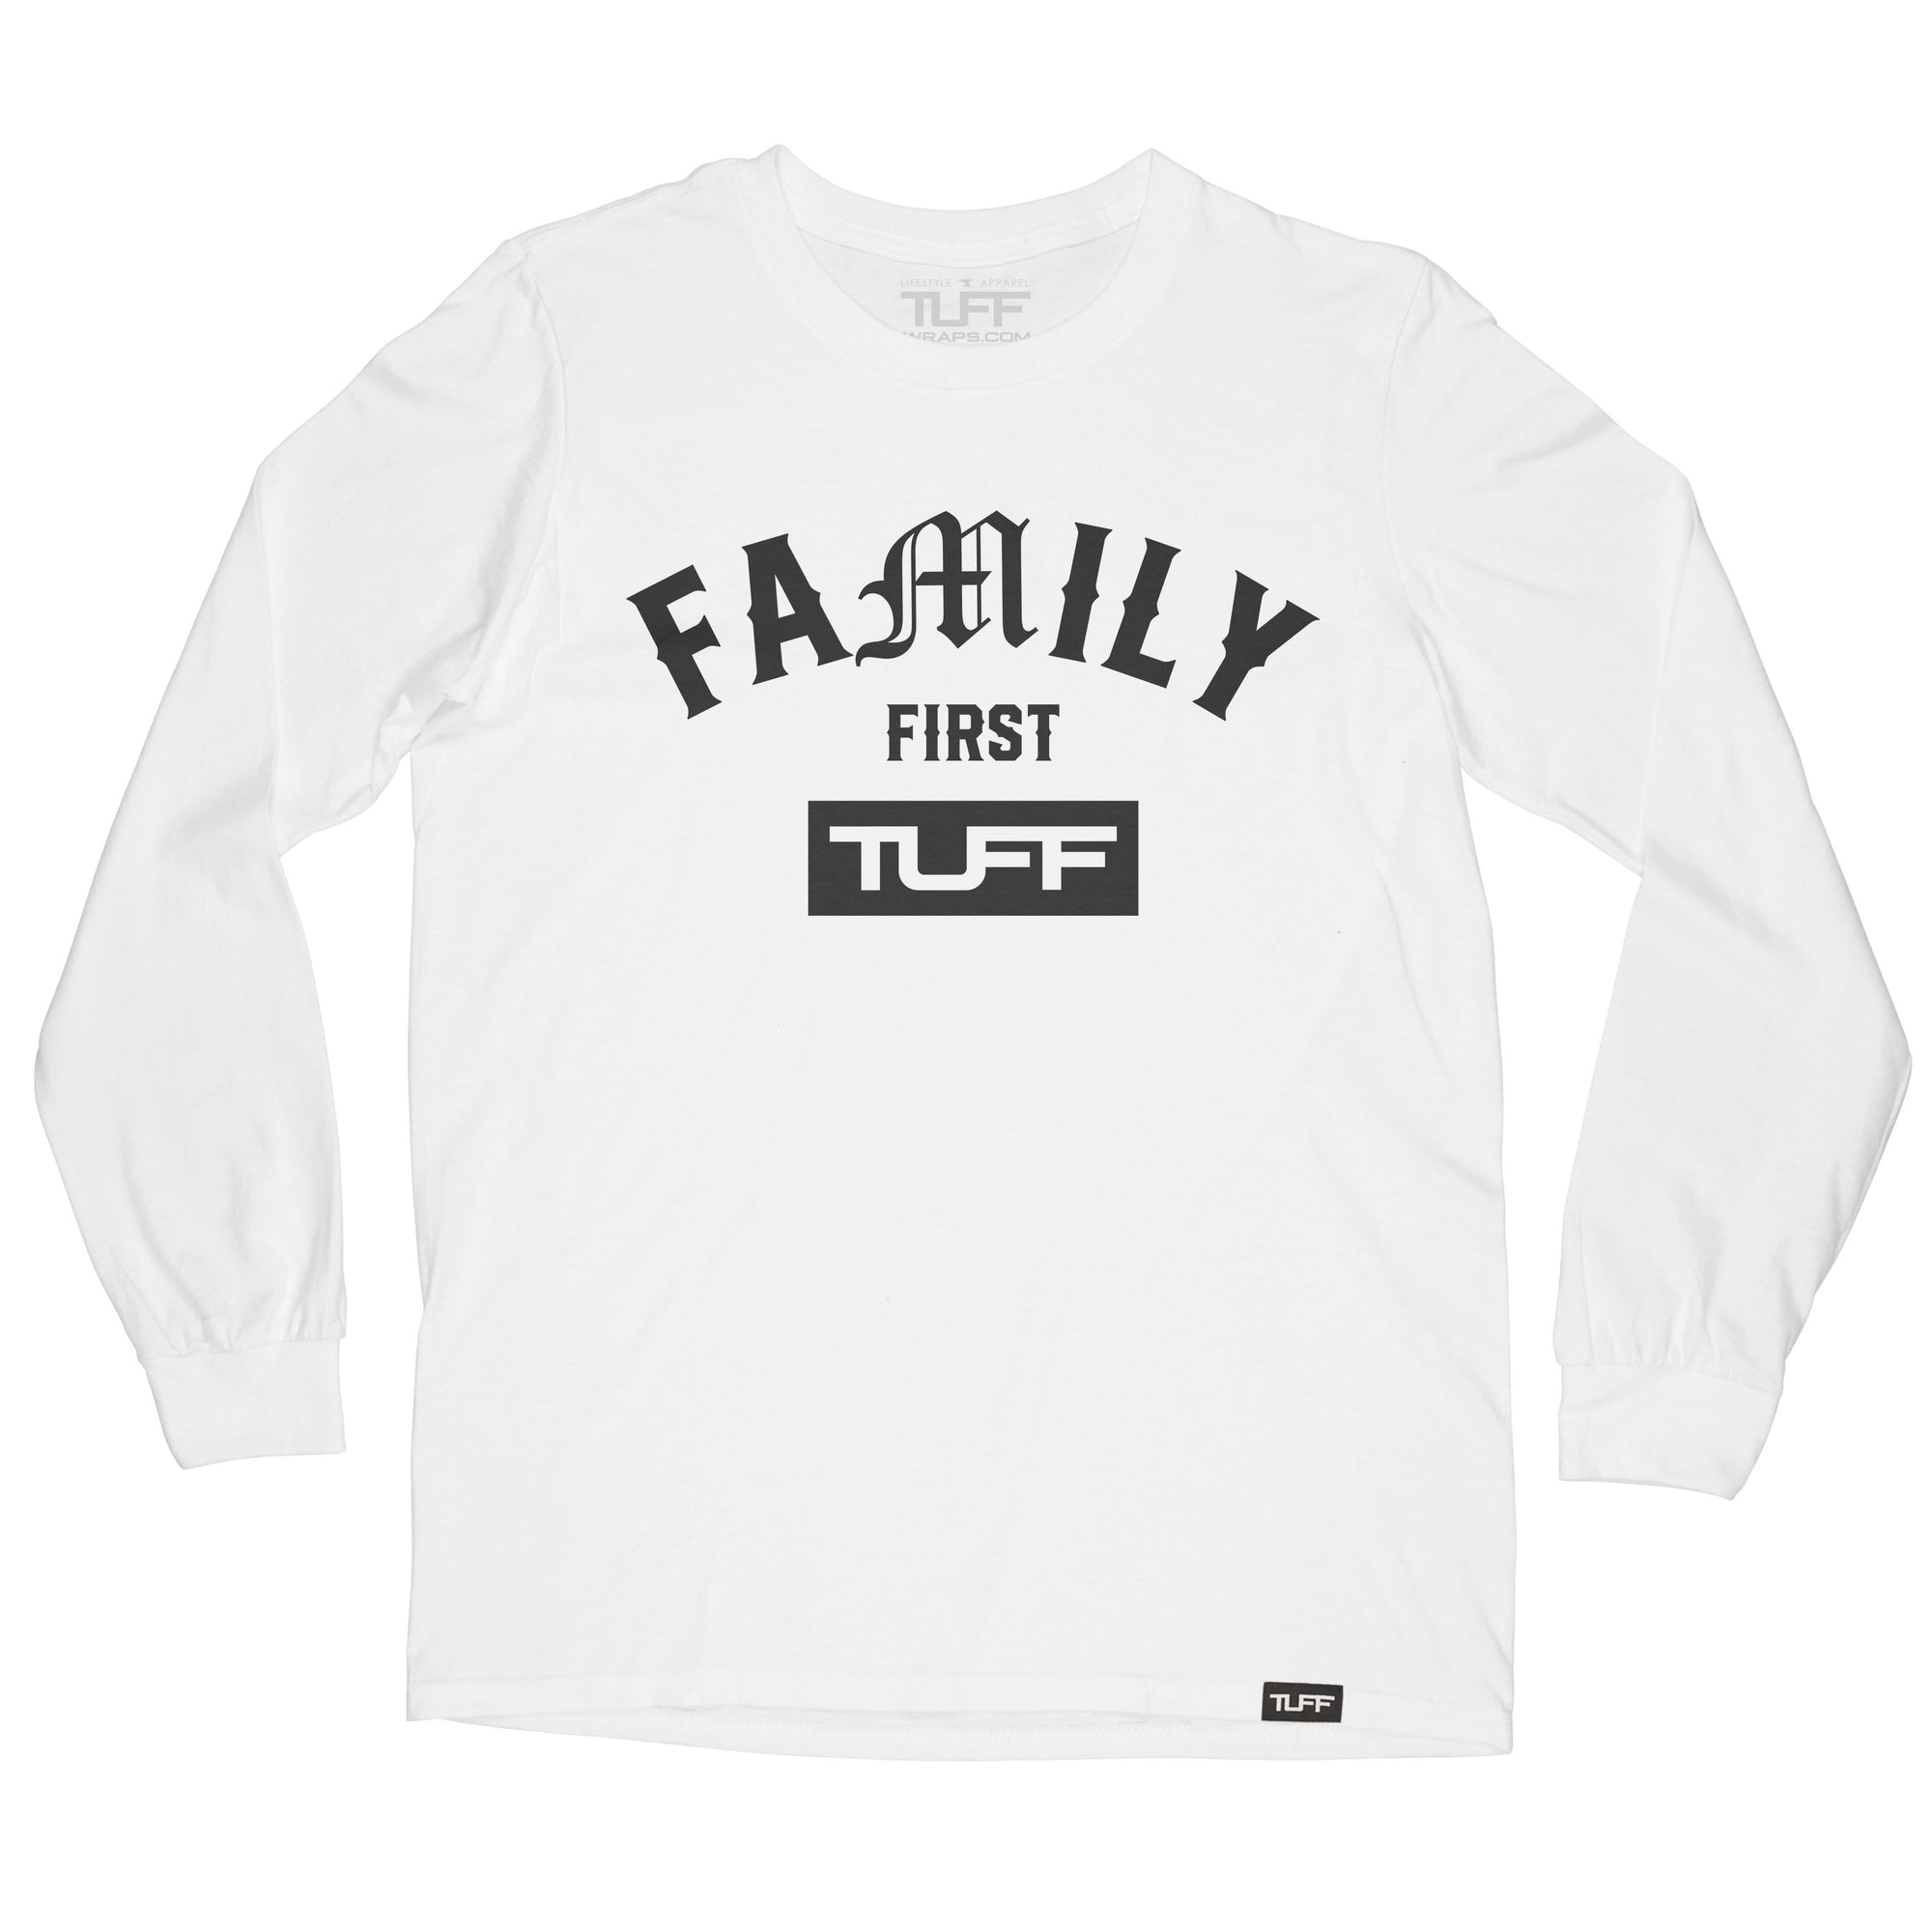 Family First Long Sleeve Tee S / White TuffWraps.com